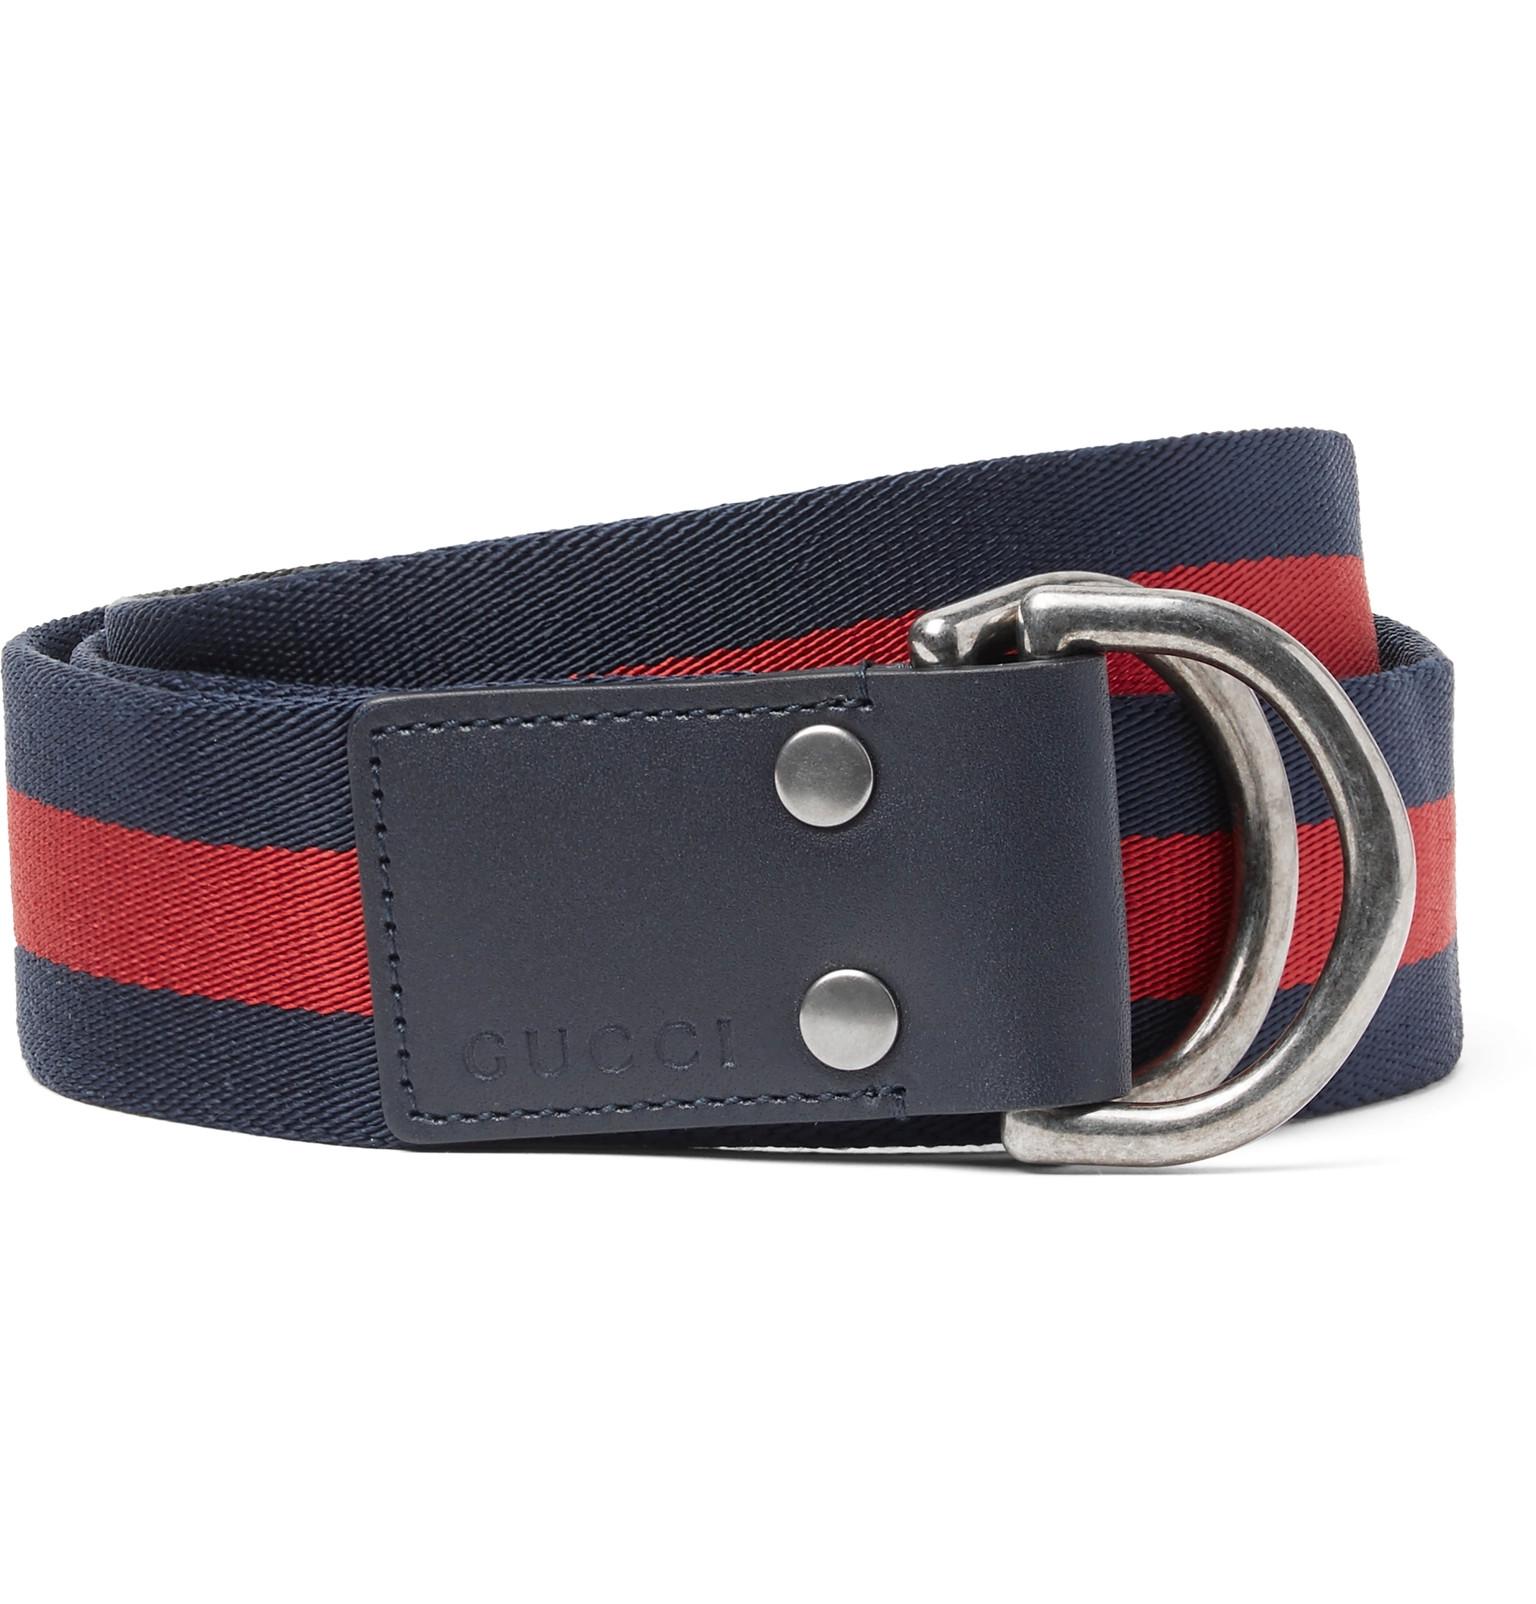 Gucci 4cm Leather-trimmed Striped Webbing Belt in Blue for Men - Lyst